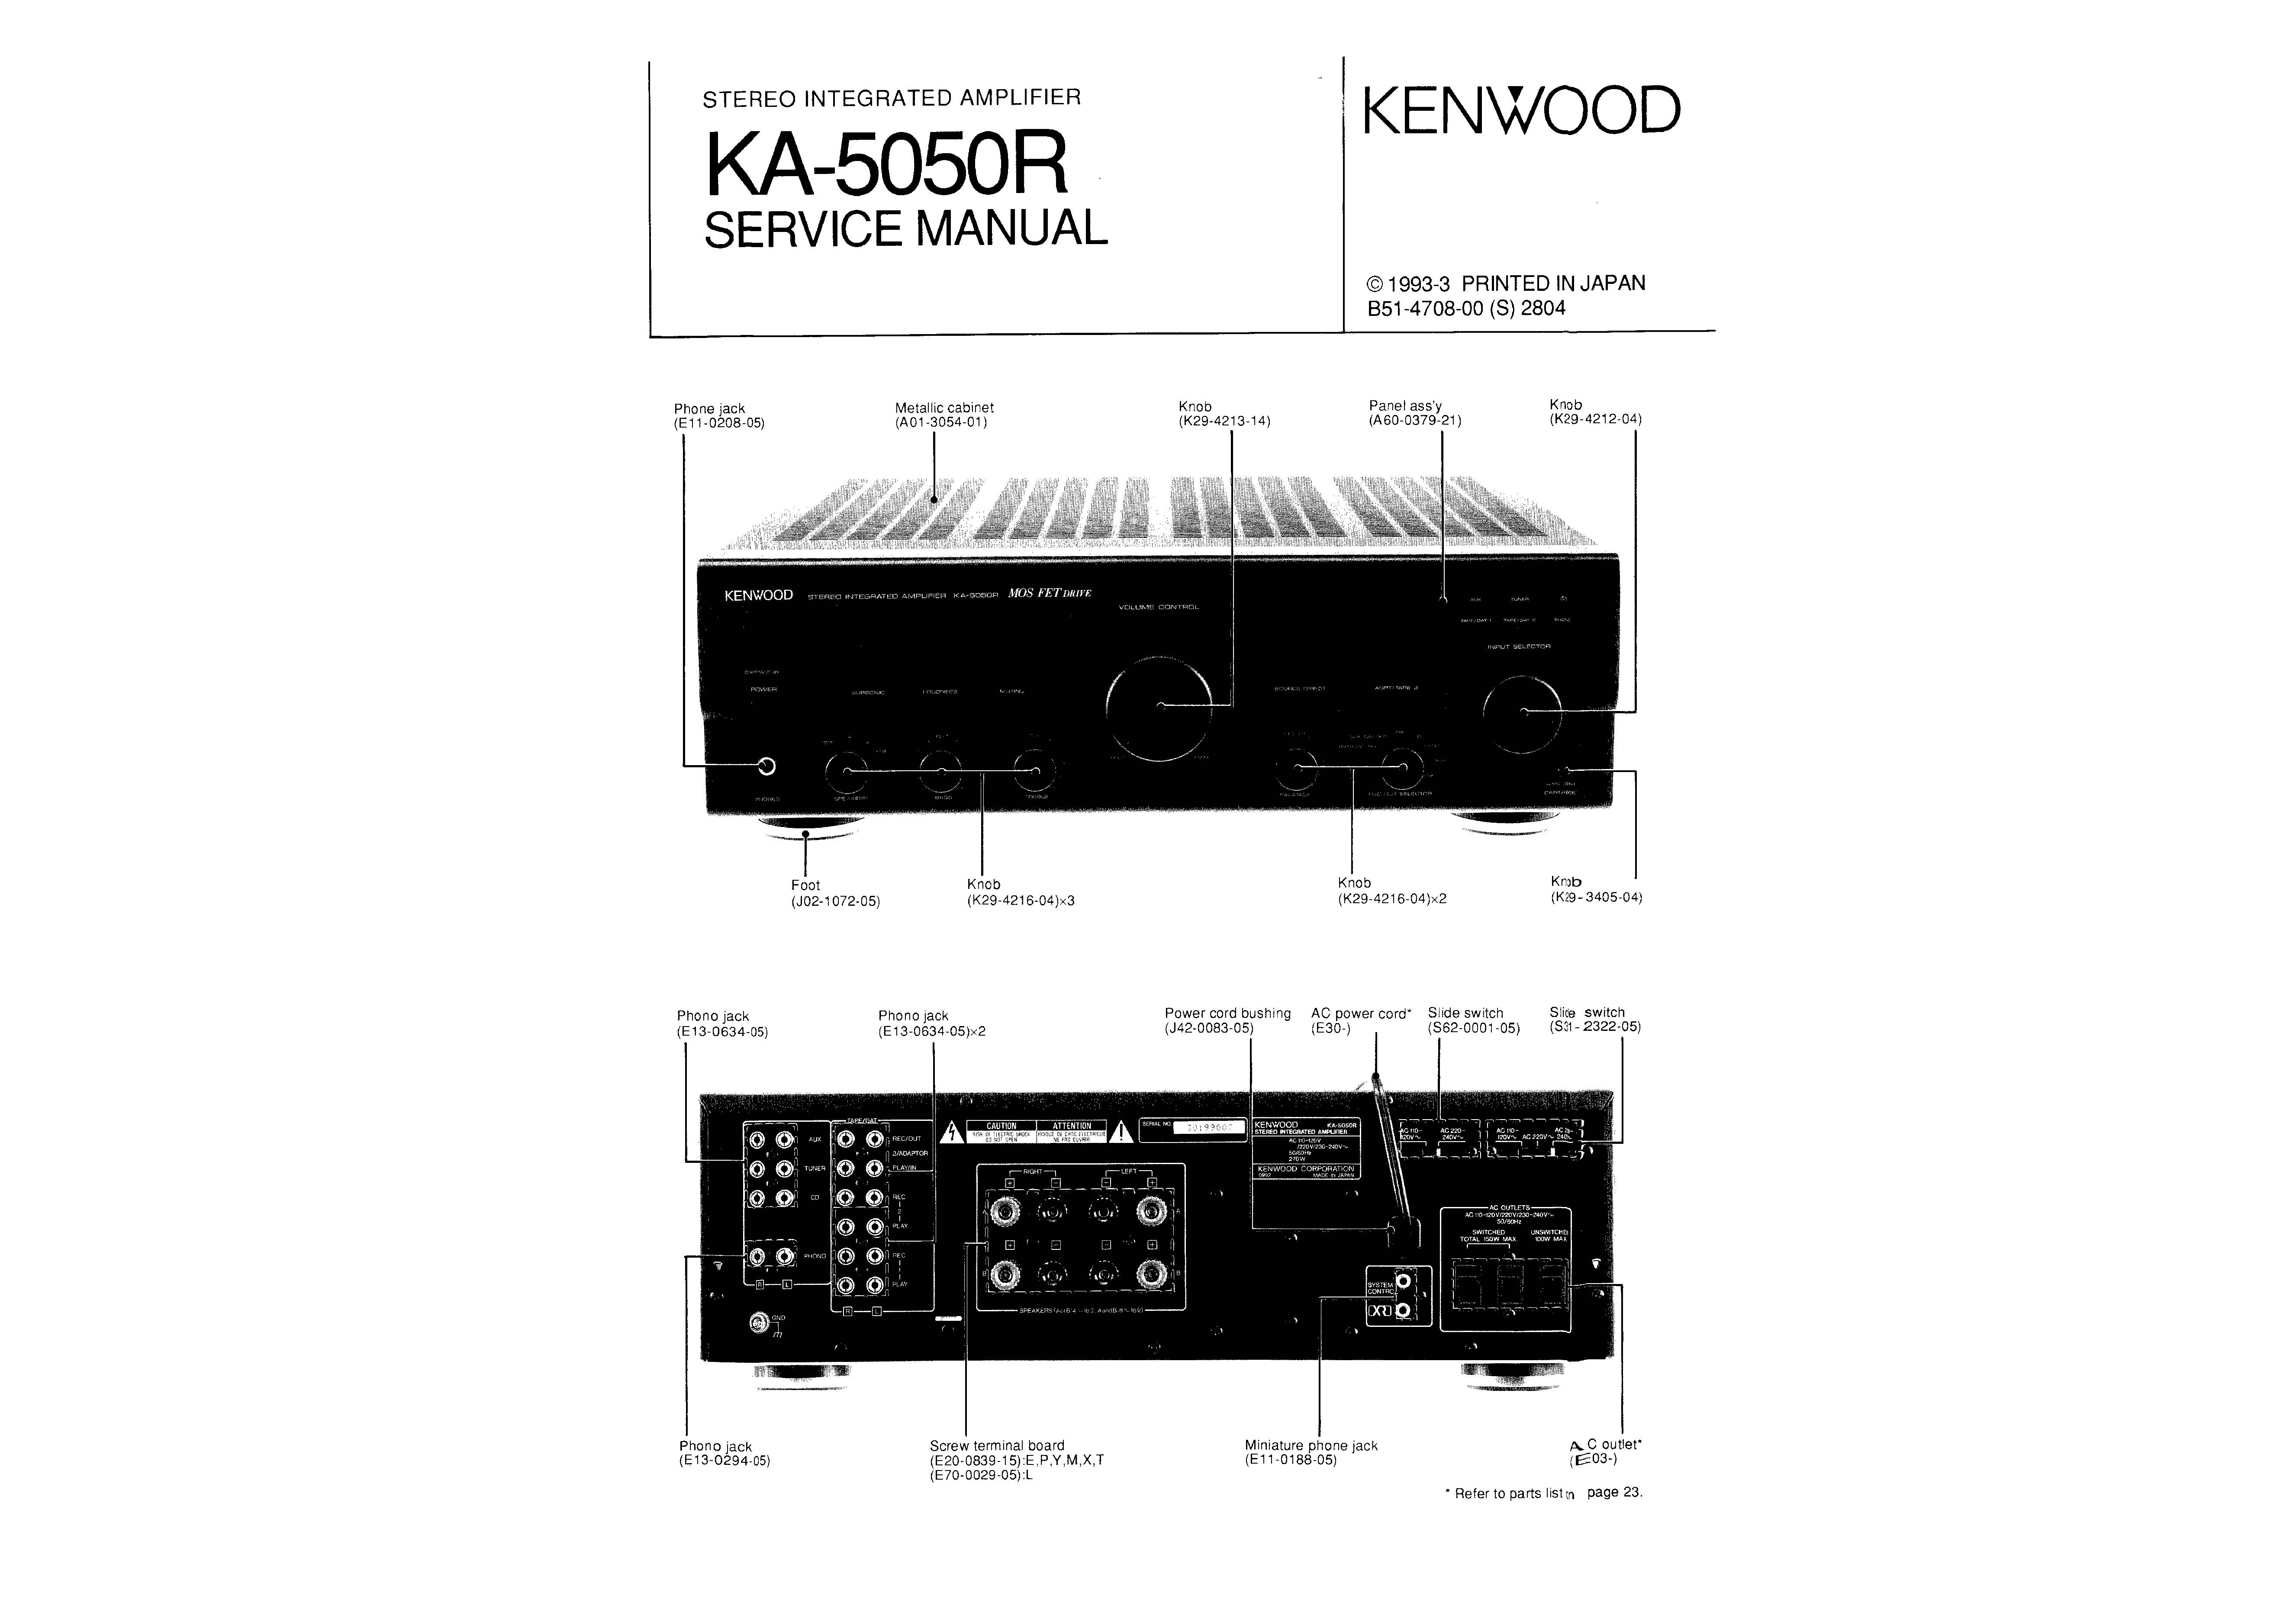 Kenwood KA-5050R